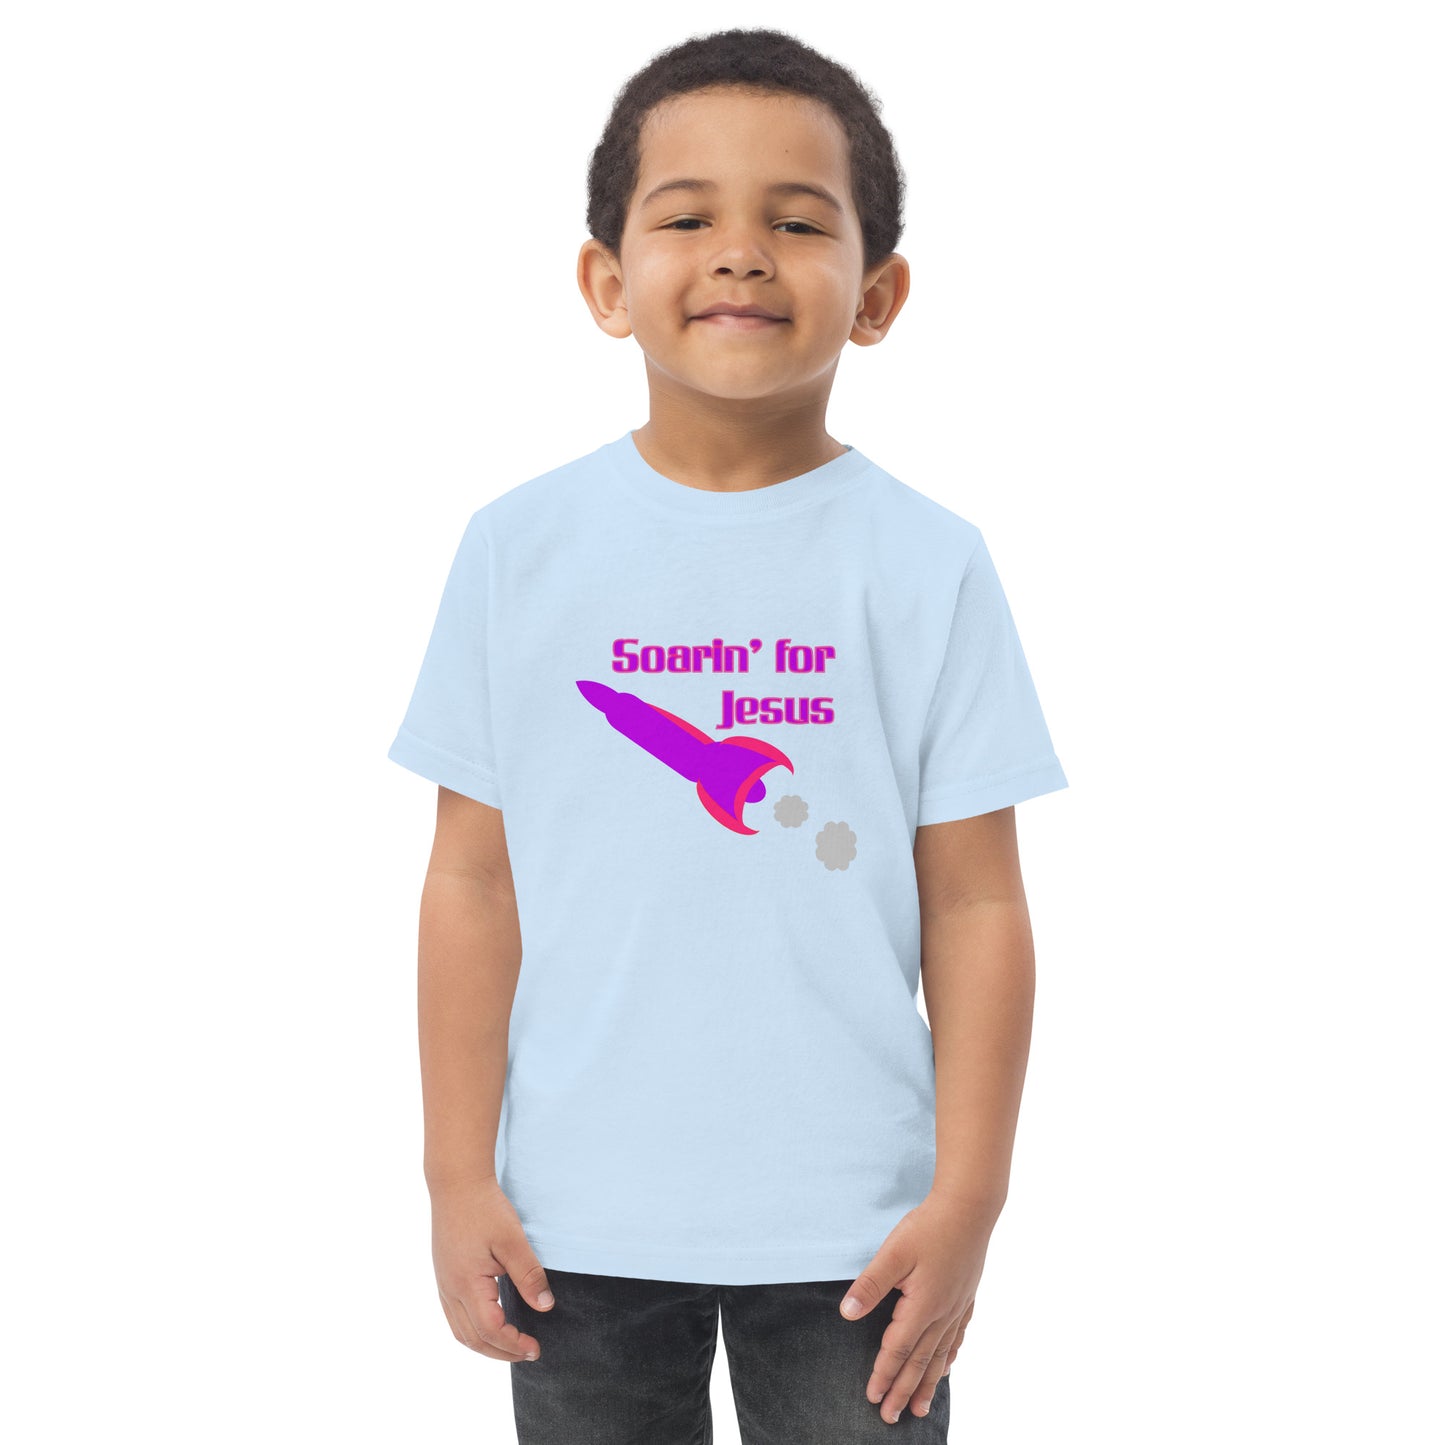 Soarin' for Jesus Toddler T-Shirt